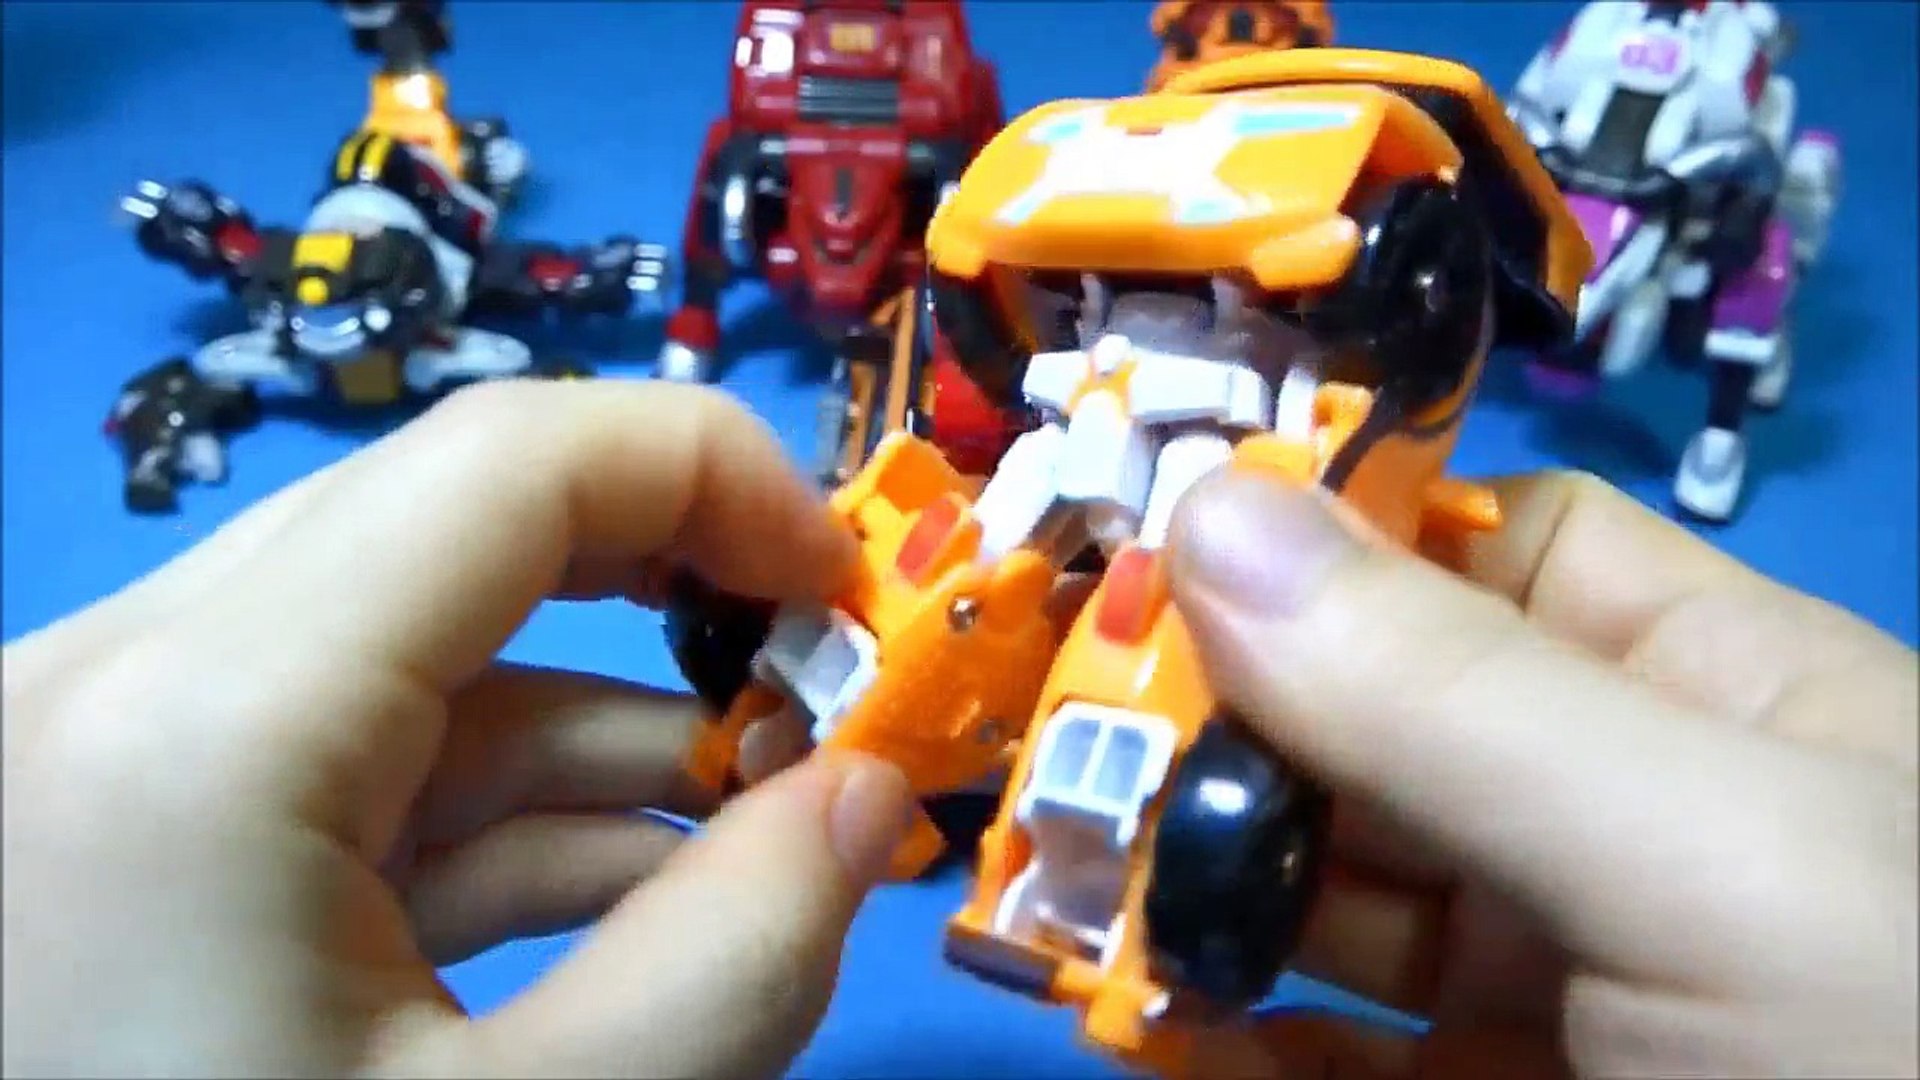 Tobot Adventure Mini X Transformer Robot Car Toy Action Figure 